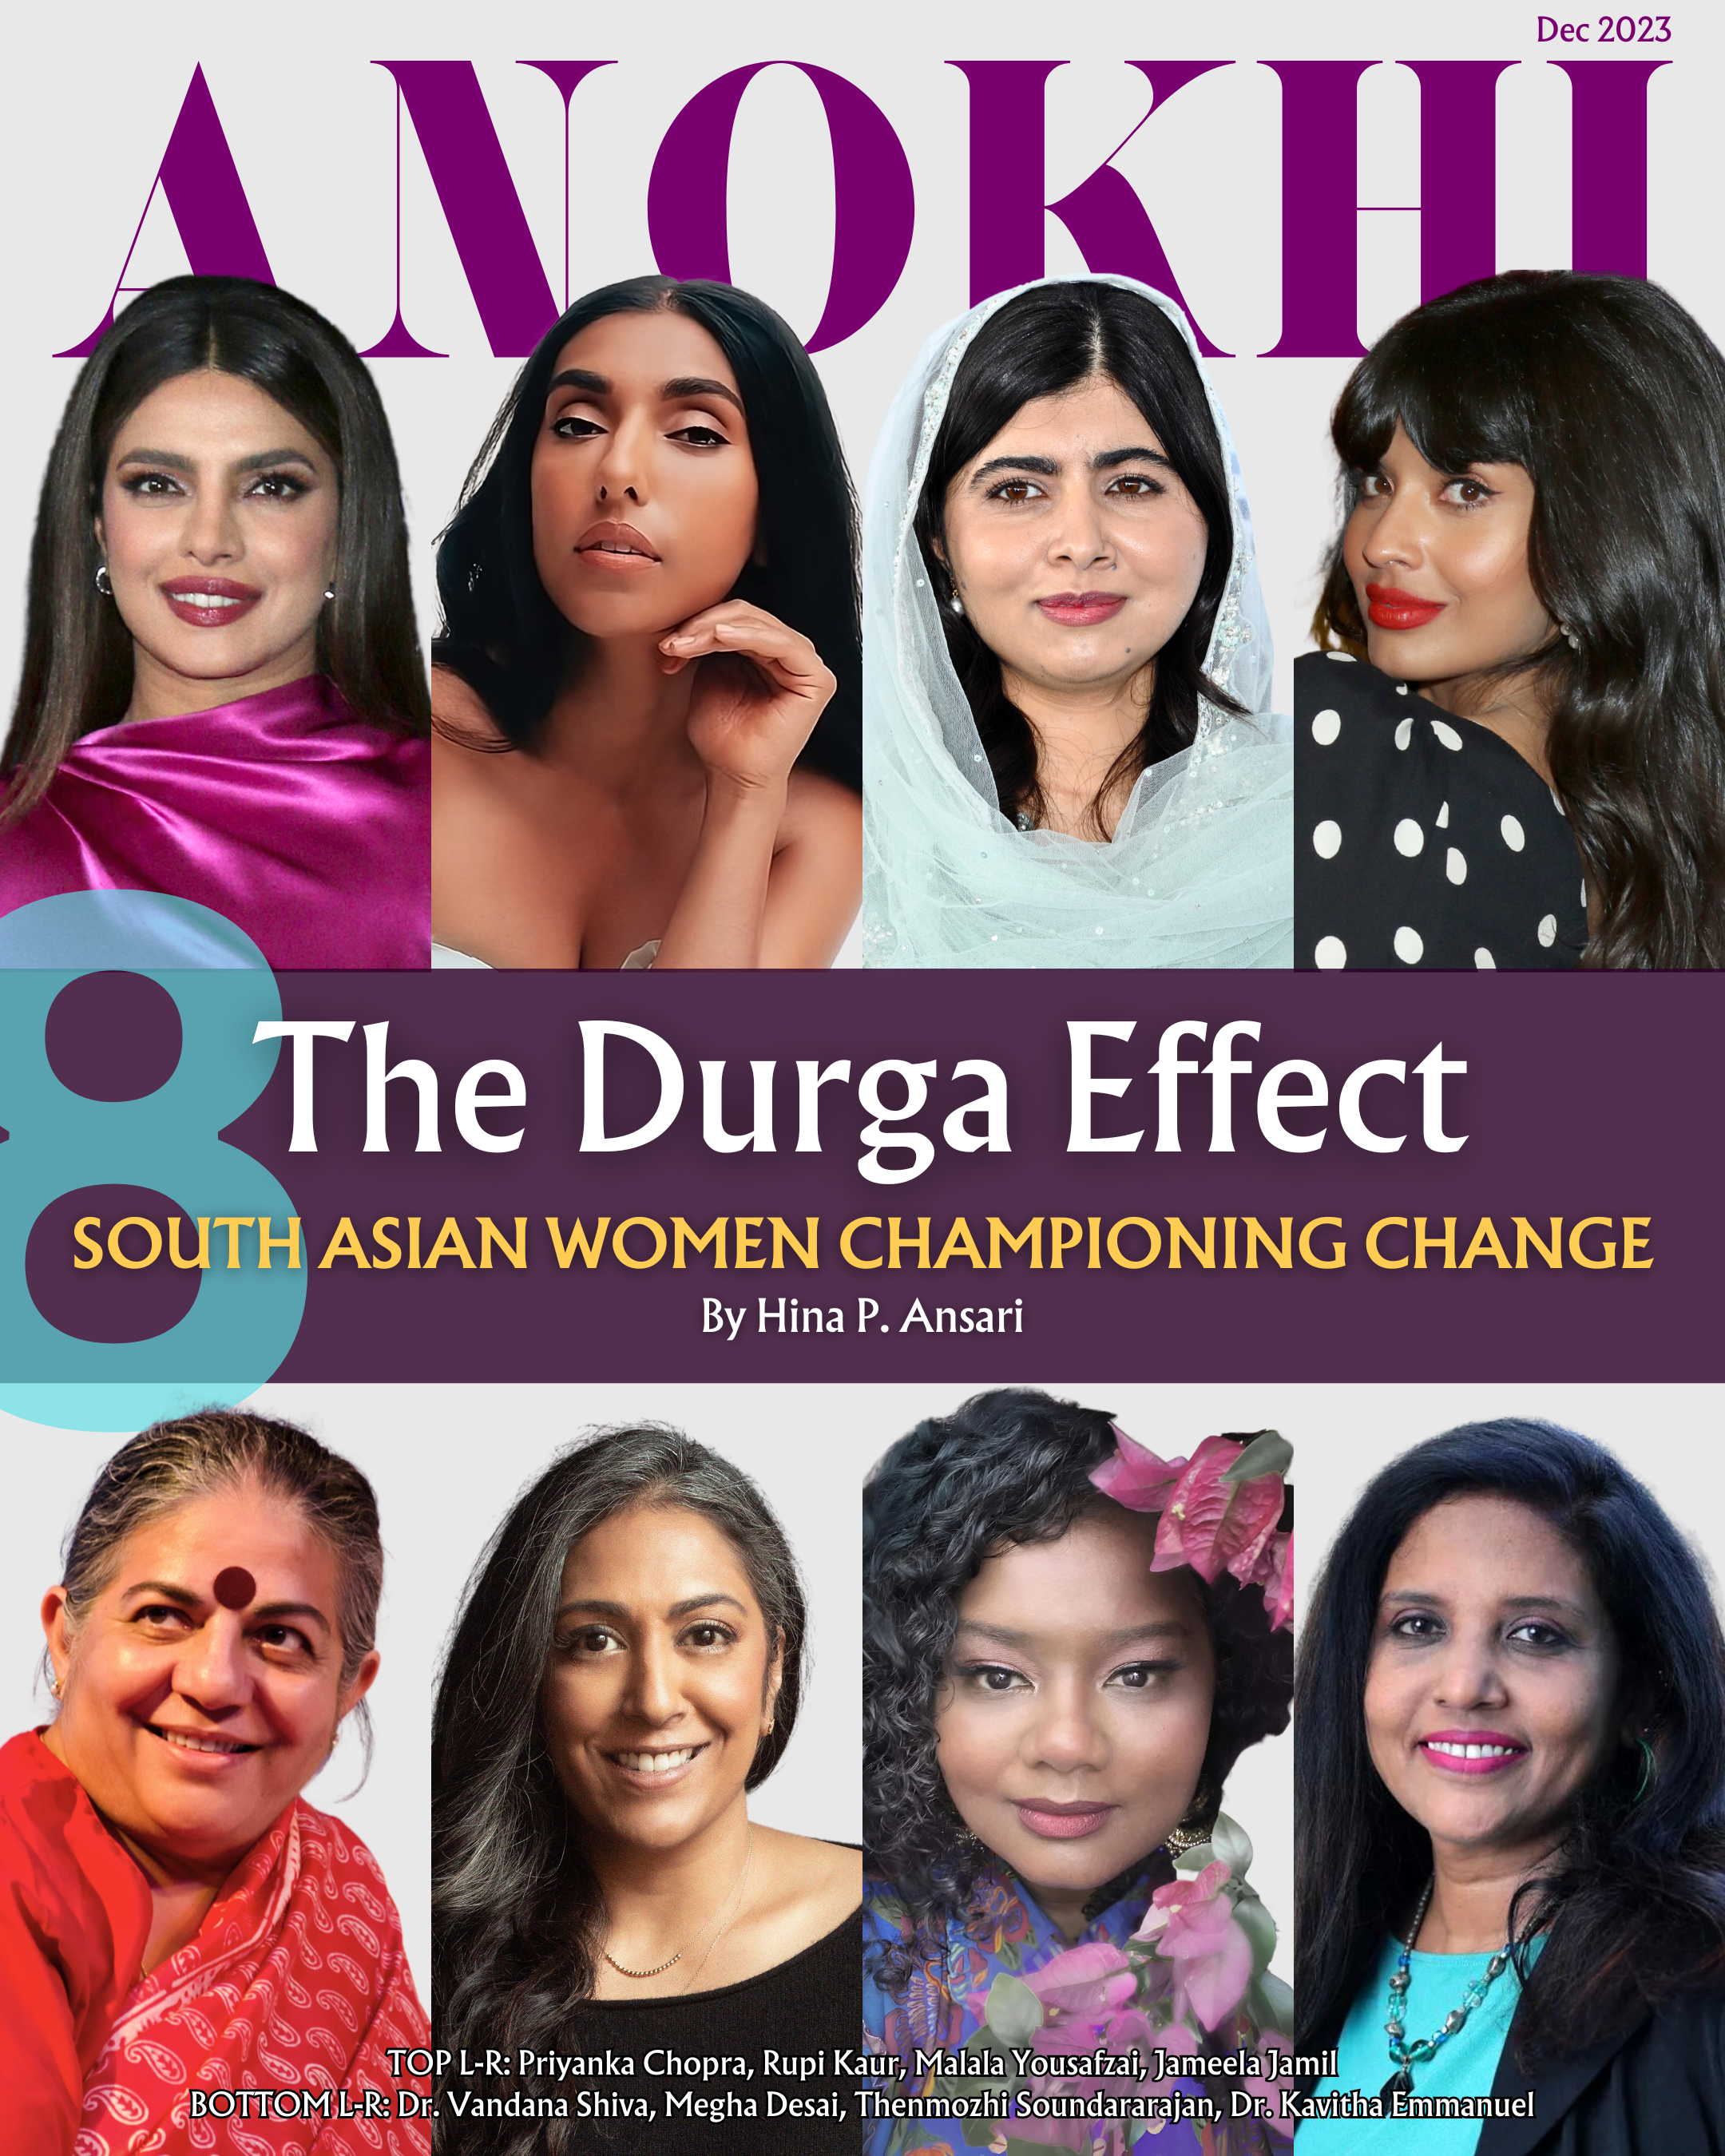 The Durga Effect - 8 South Asian Women Championing Change: Priyanka Chopra, Rupi Kaur, Malala Yousafzai, Jameela Jamil, Dr. Vandana Shiva, Megha Desai, Thenmozhi Soundararajan, Dr. Kavitha Emmanuel